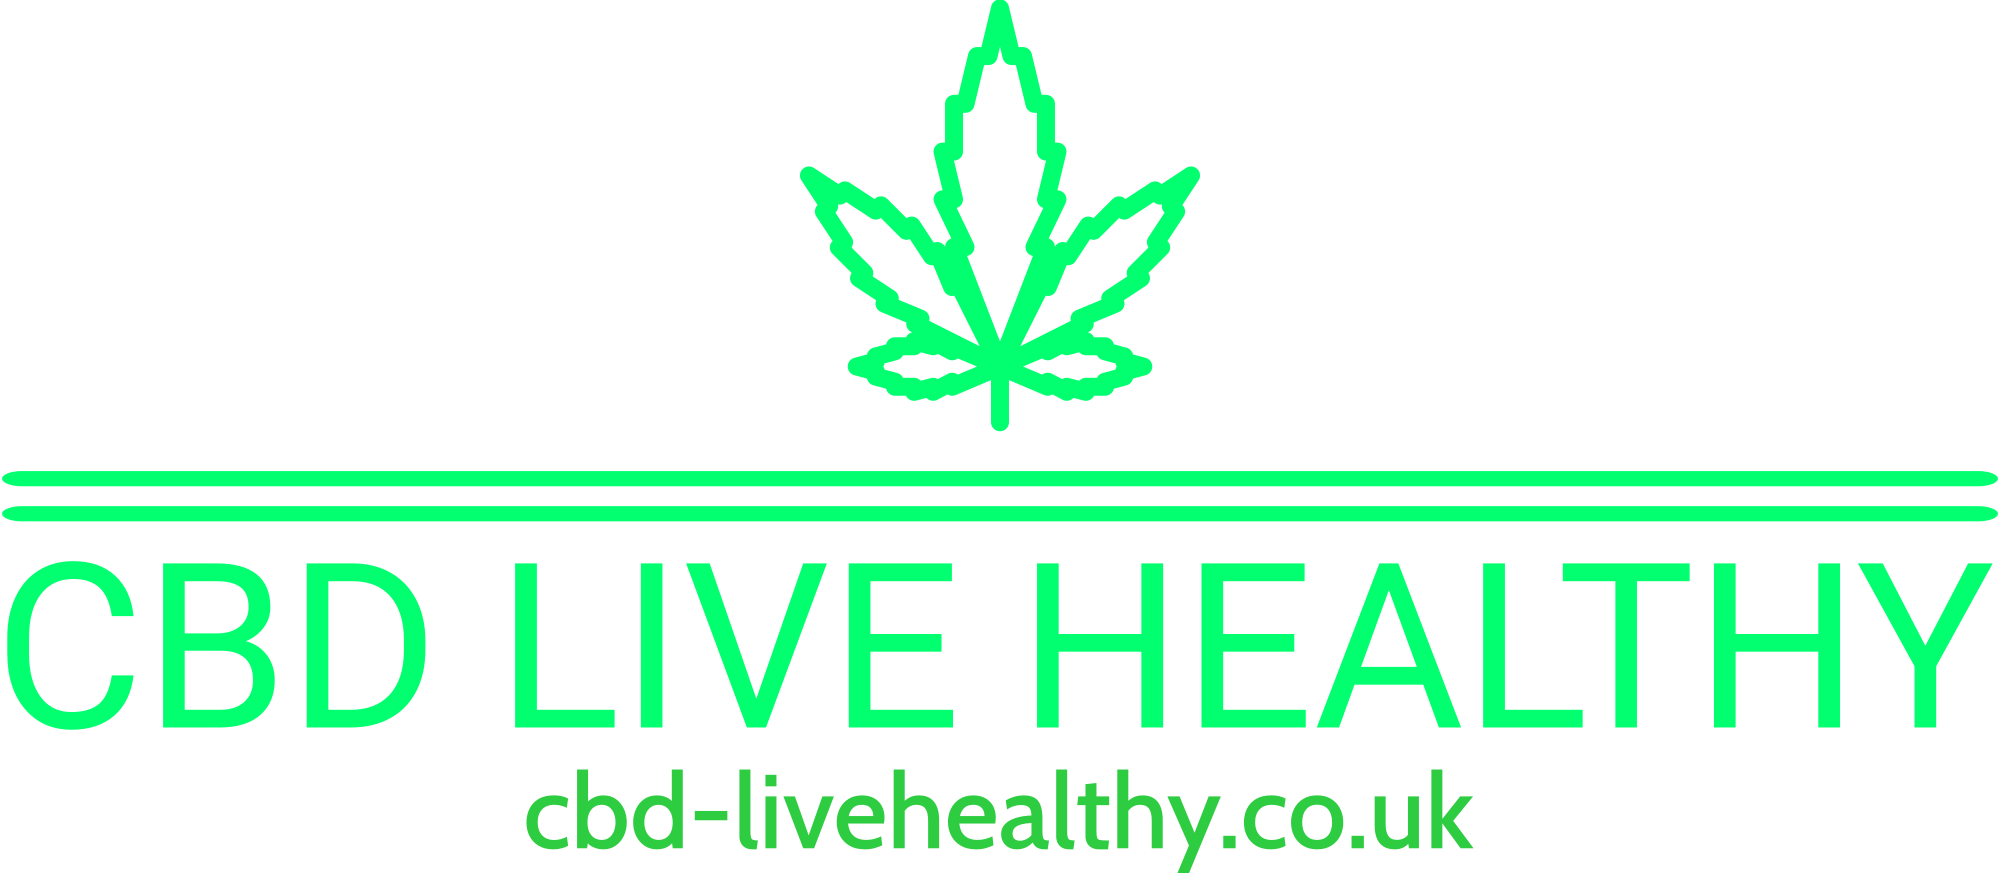 cbd-livehealthy.co.uk